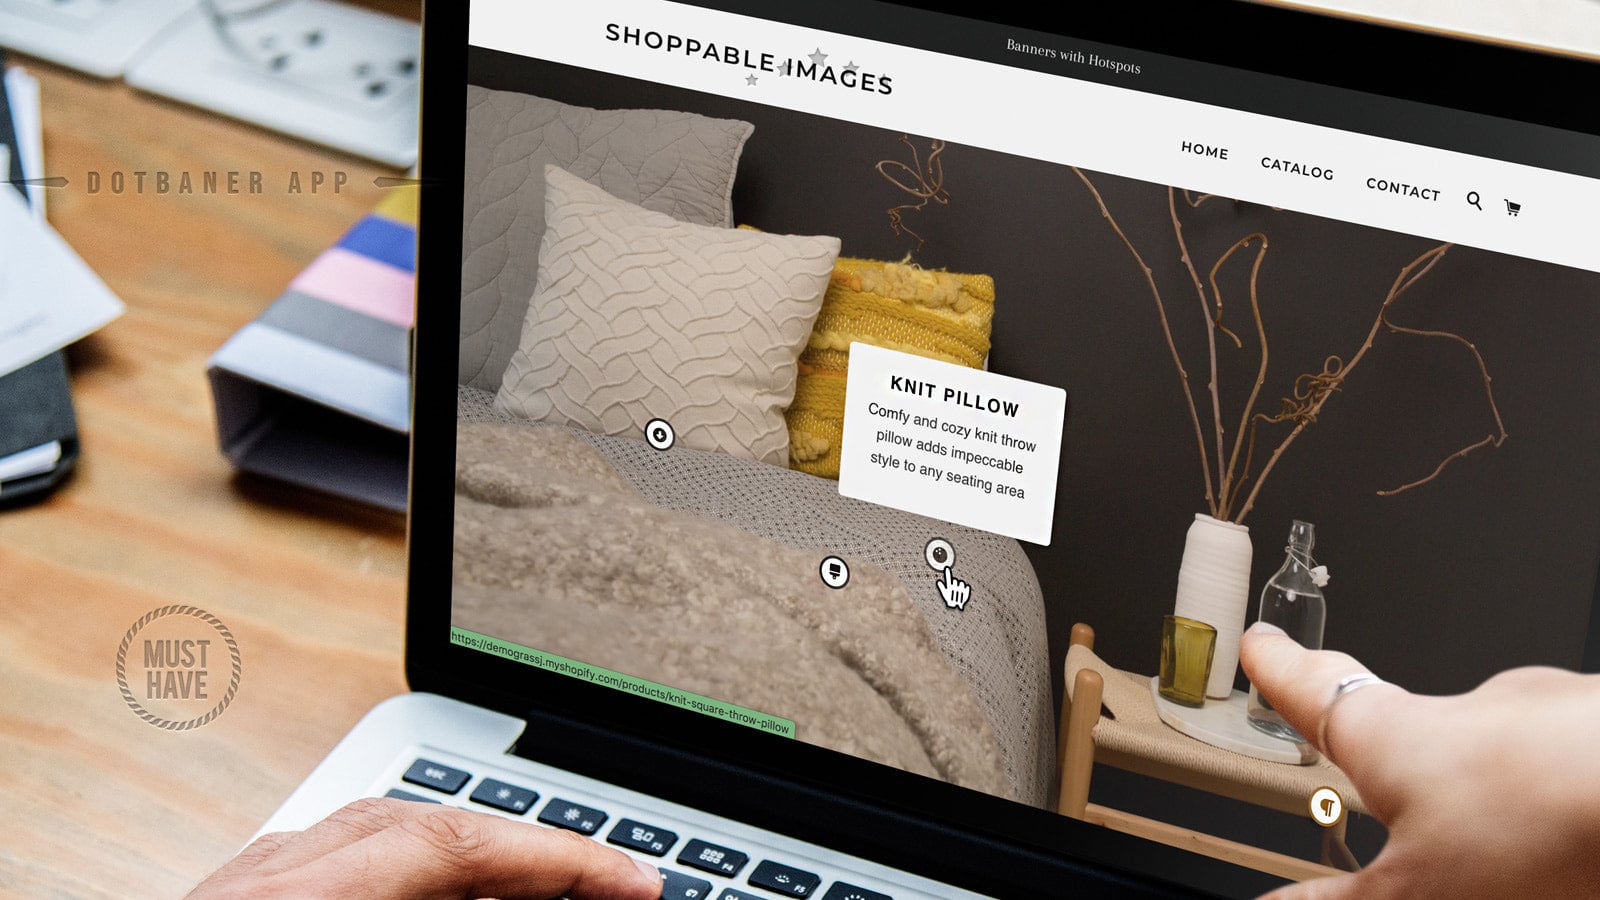 Dot Banner: Shoppable Images